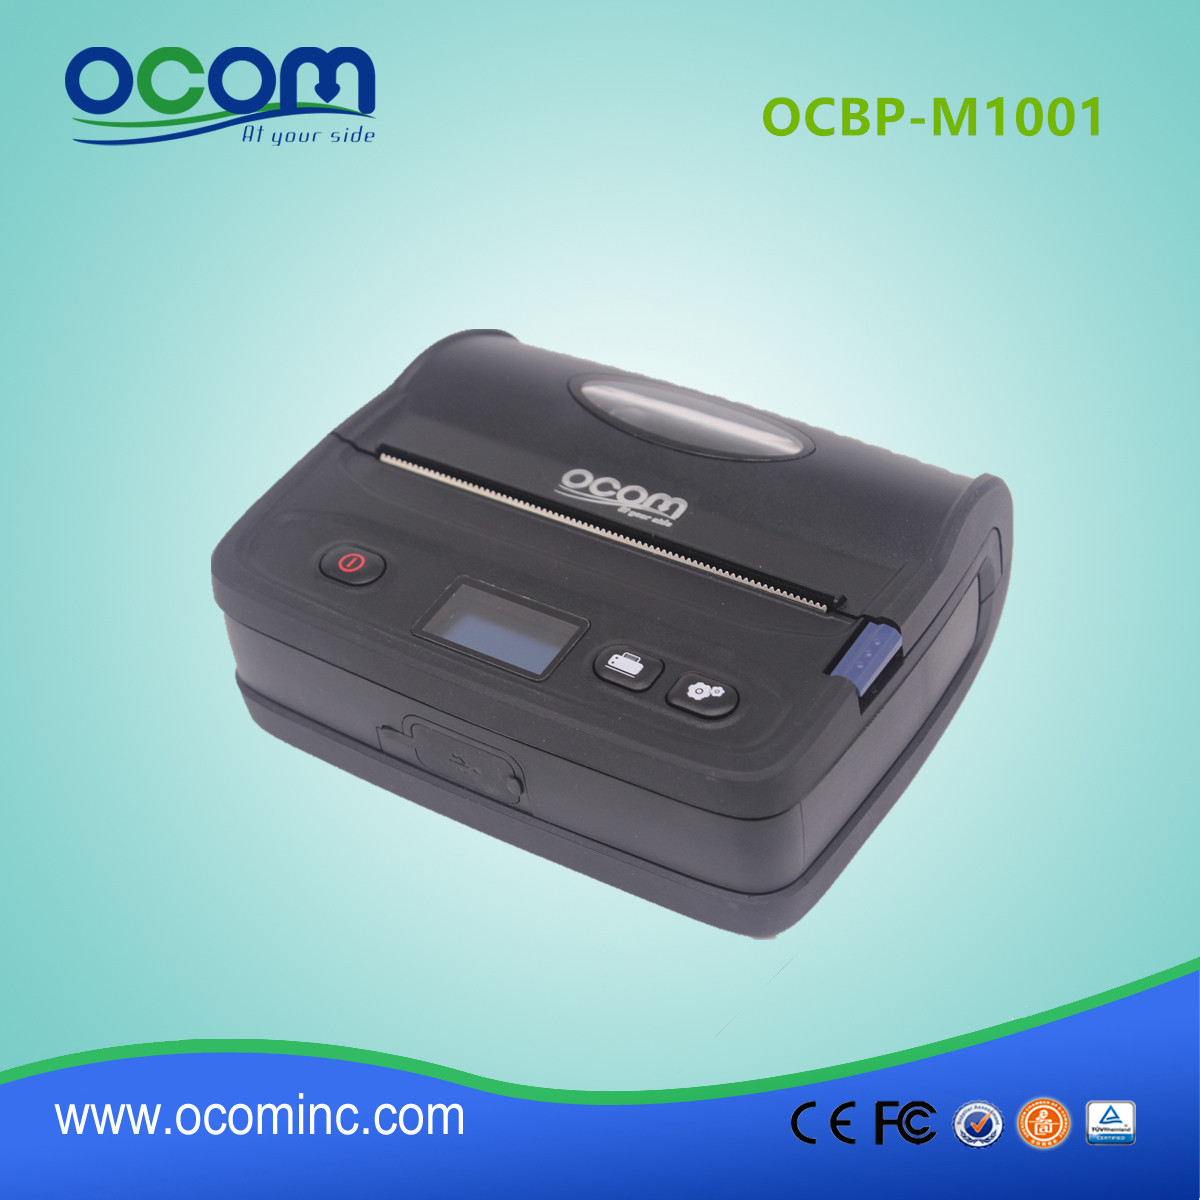 OCBP-M1001 黑色便携式胶粘剂 POS 热敏收据条码标签打印机